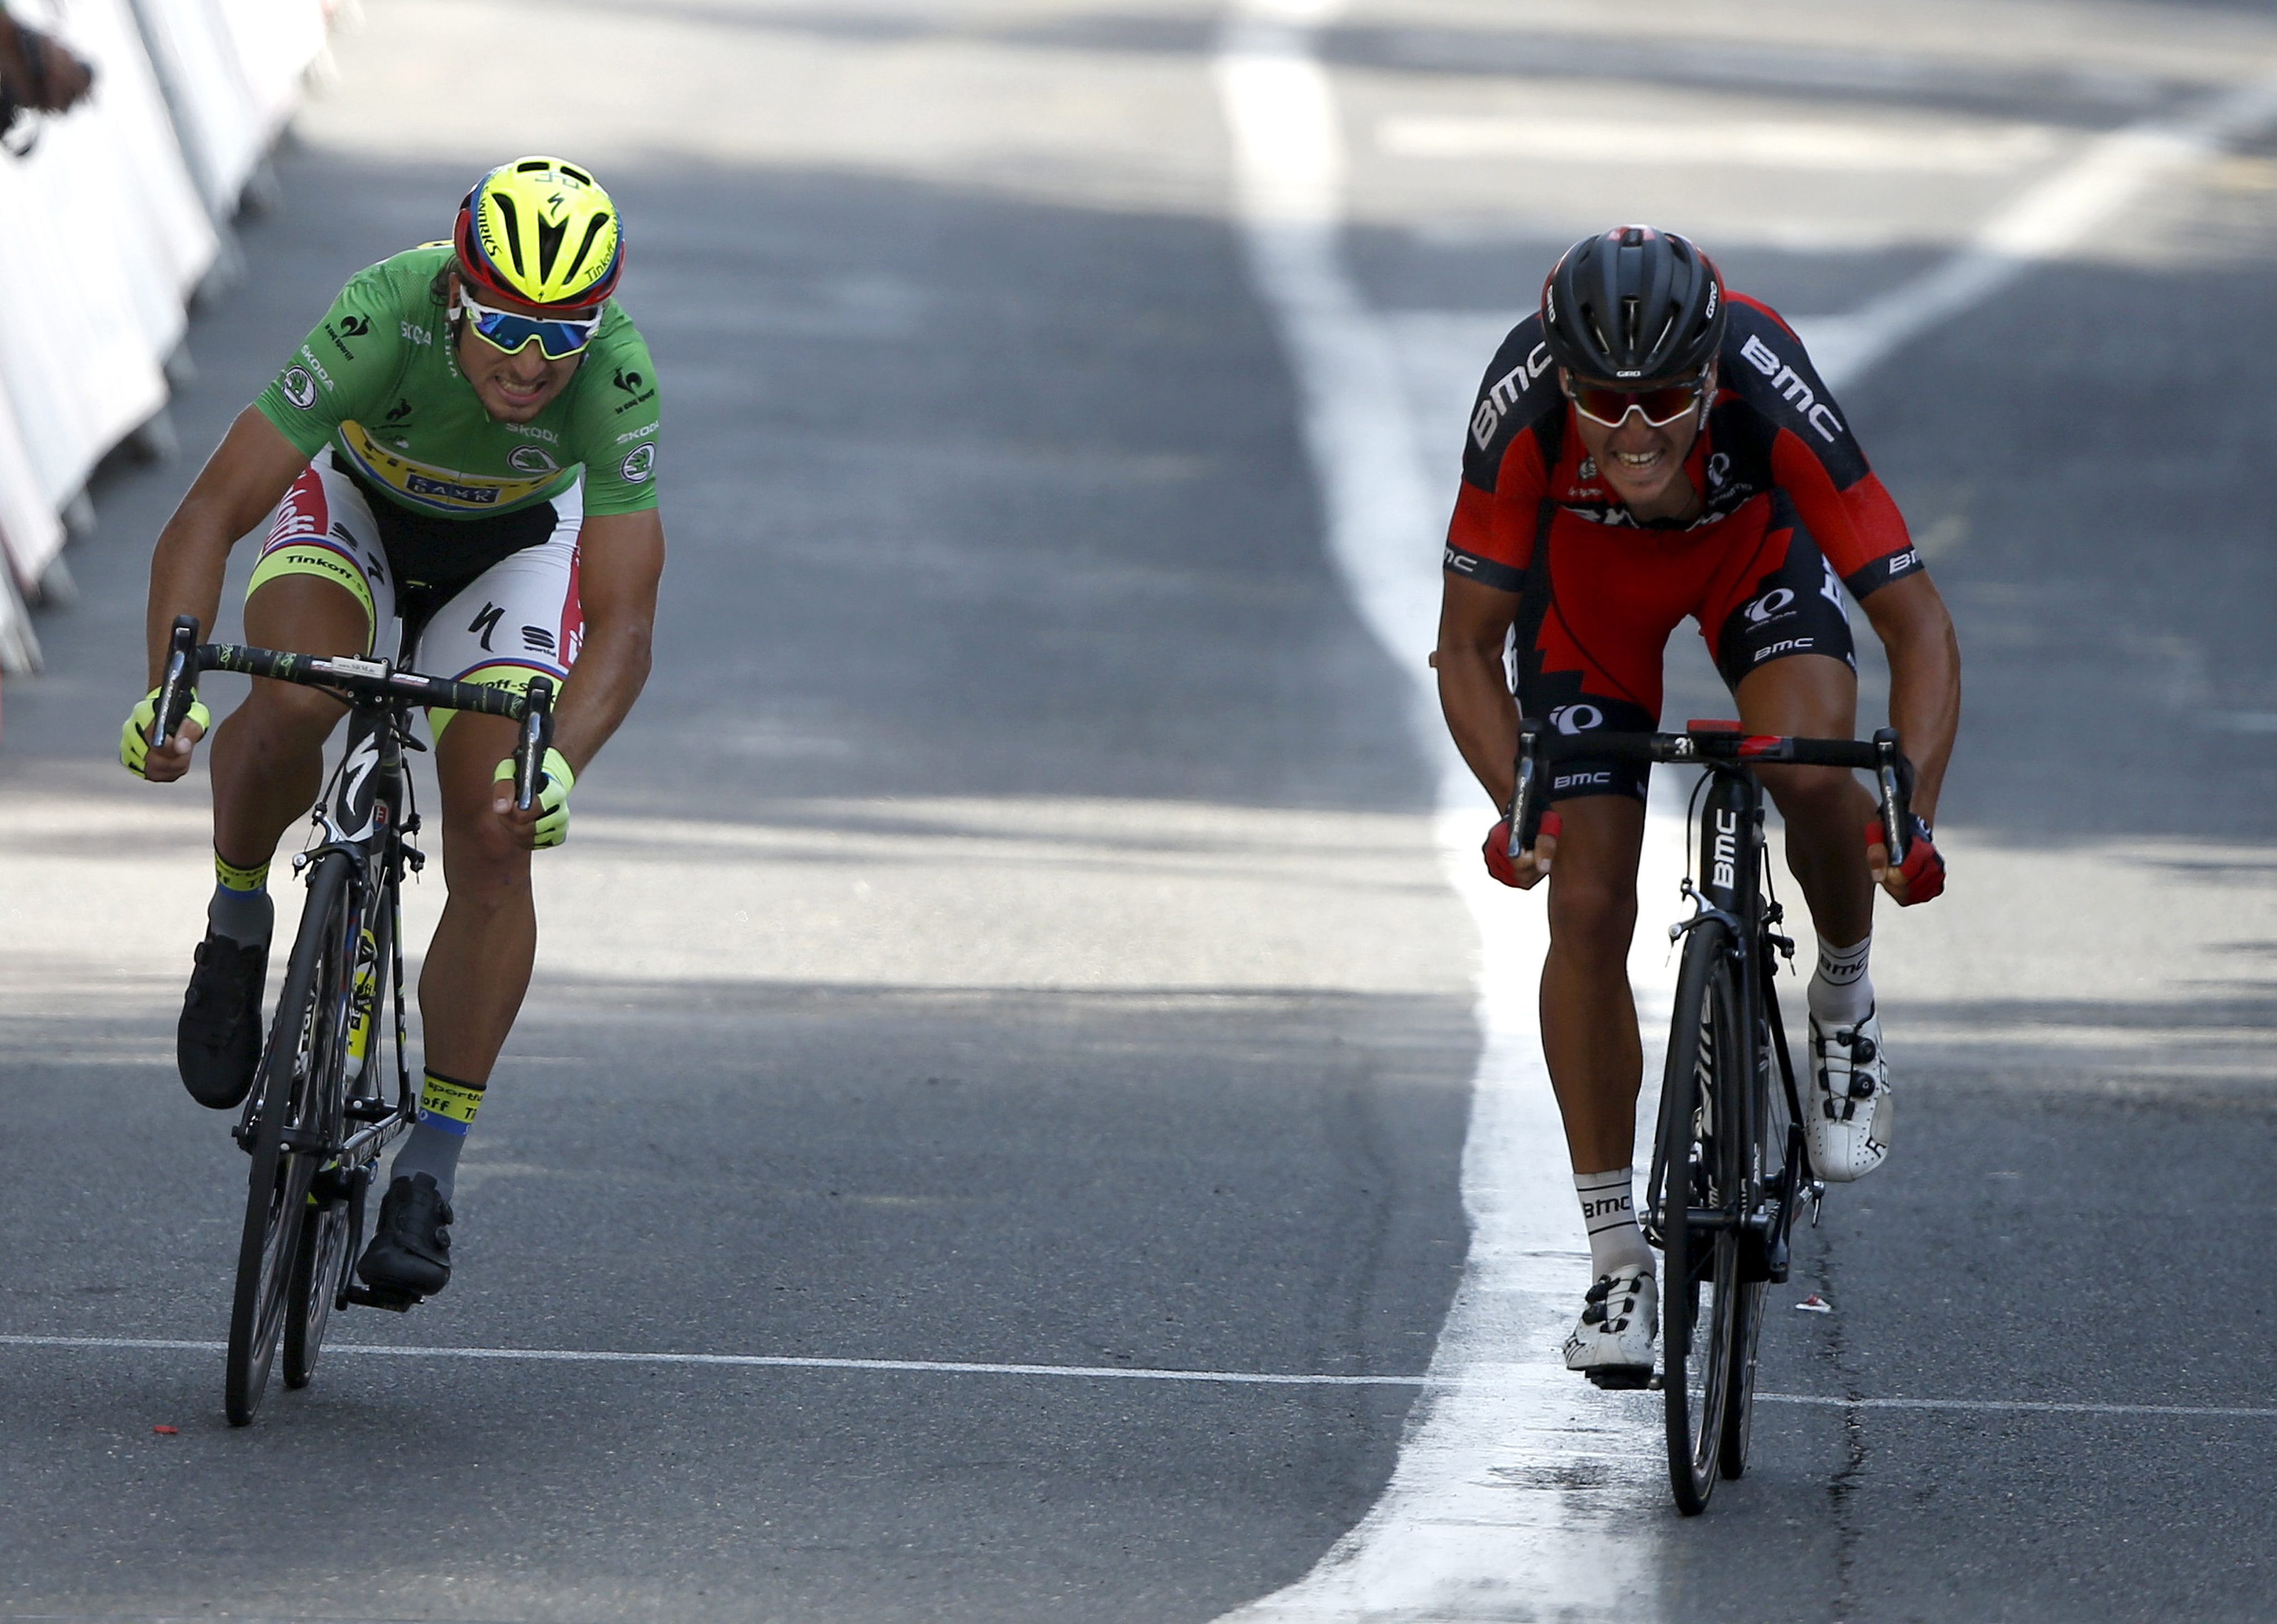 Greg Van Avermaet of Belgium sprints to win ahead of Slovak rider Peter Sagan to claim stage 13 of the Tour de France. Photo: EPA